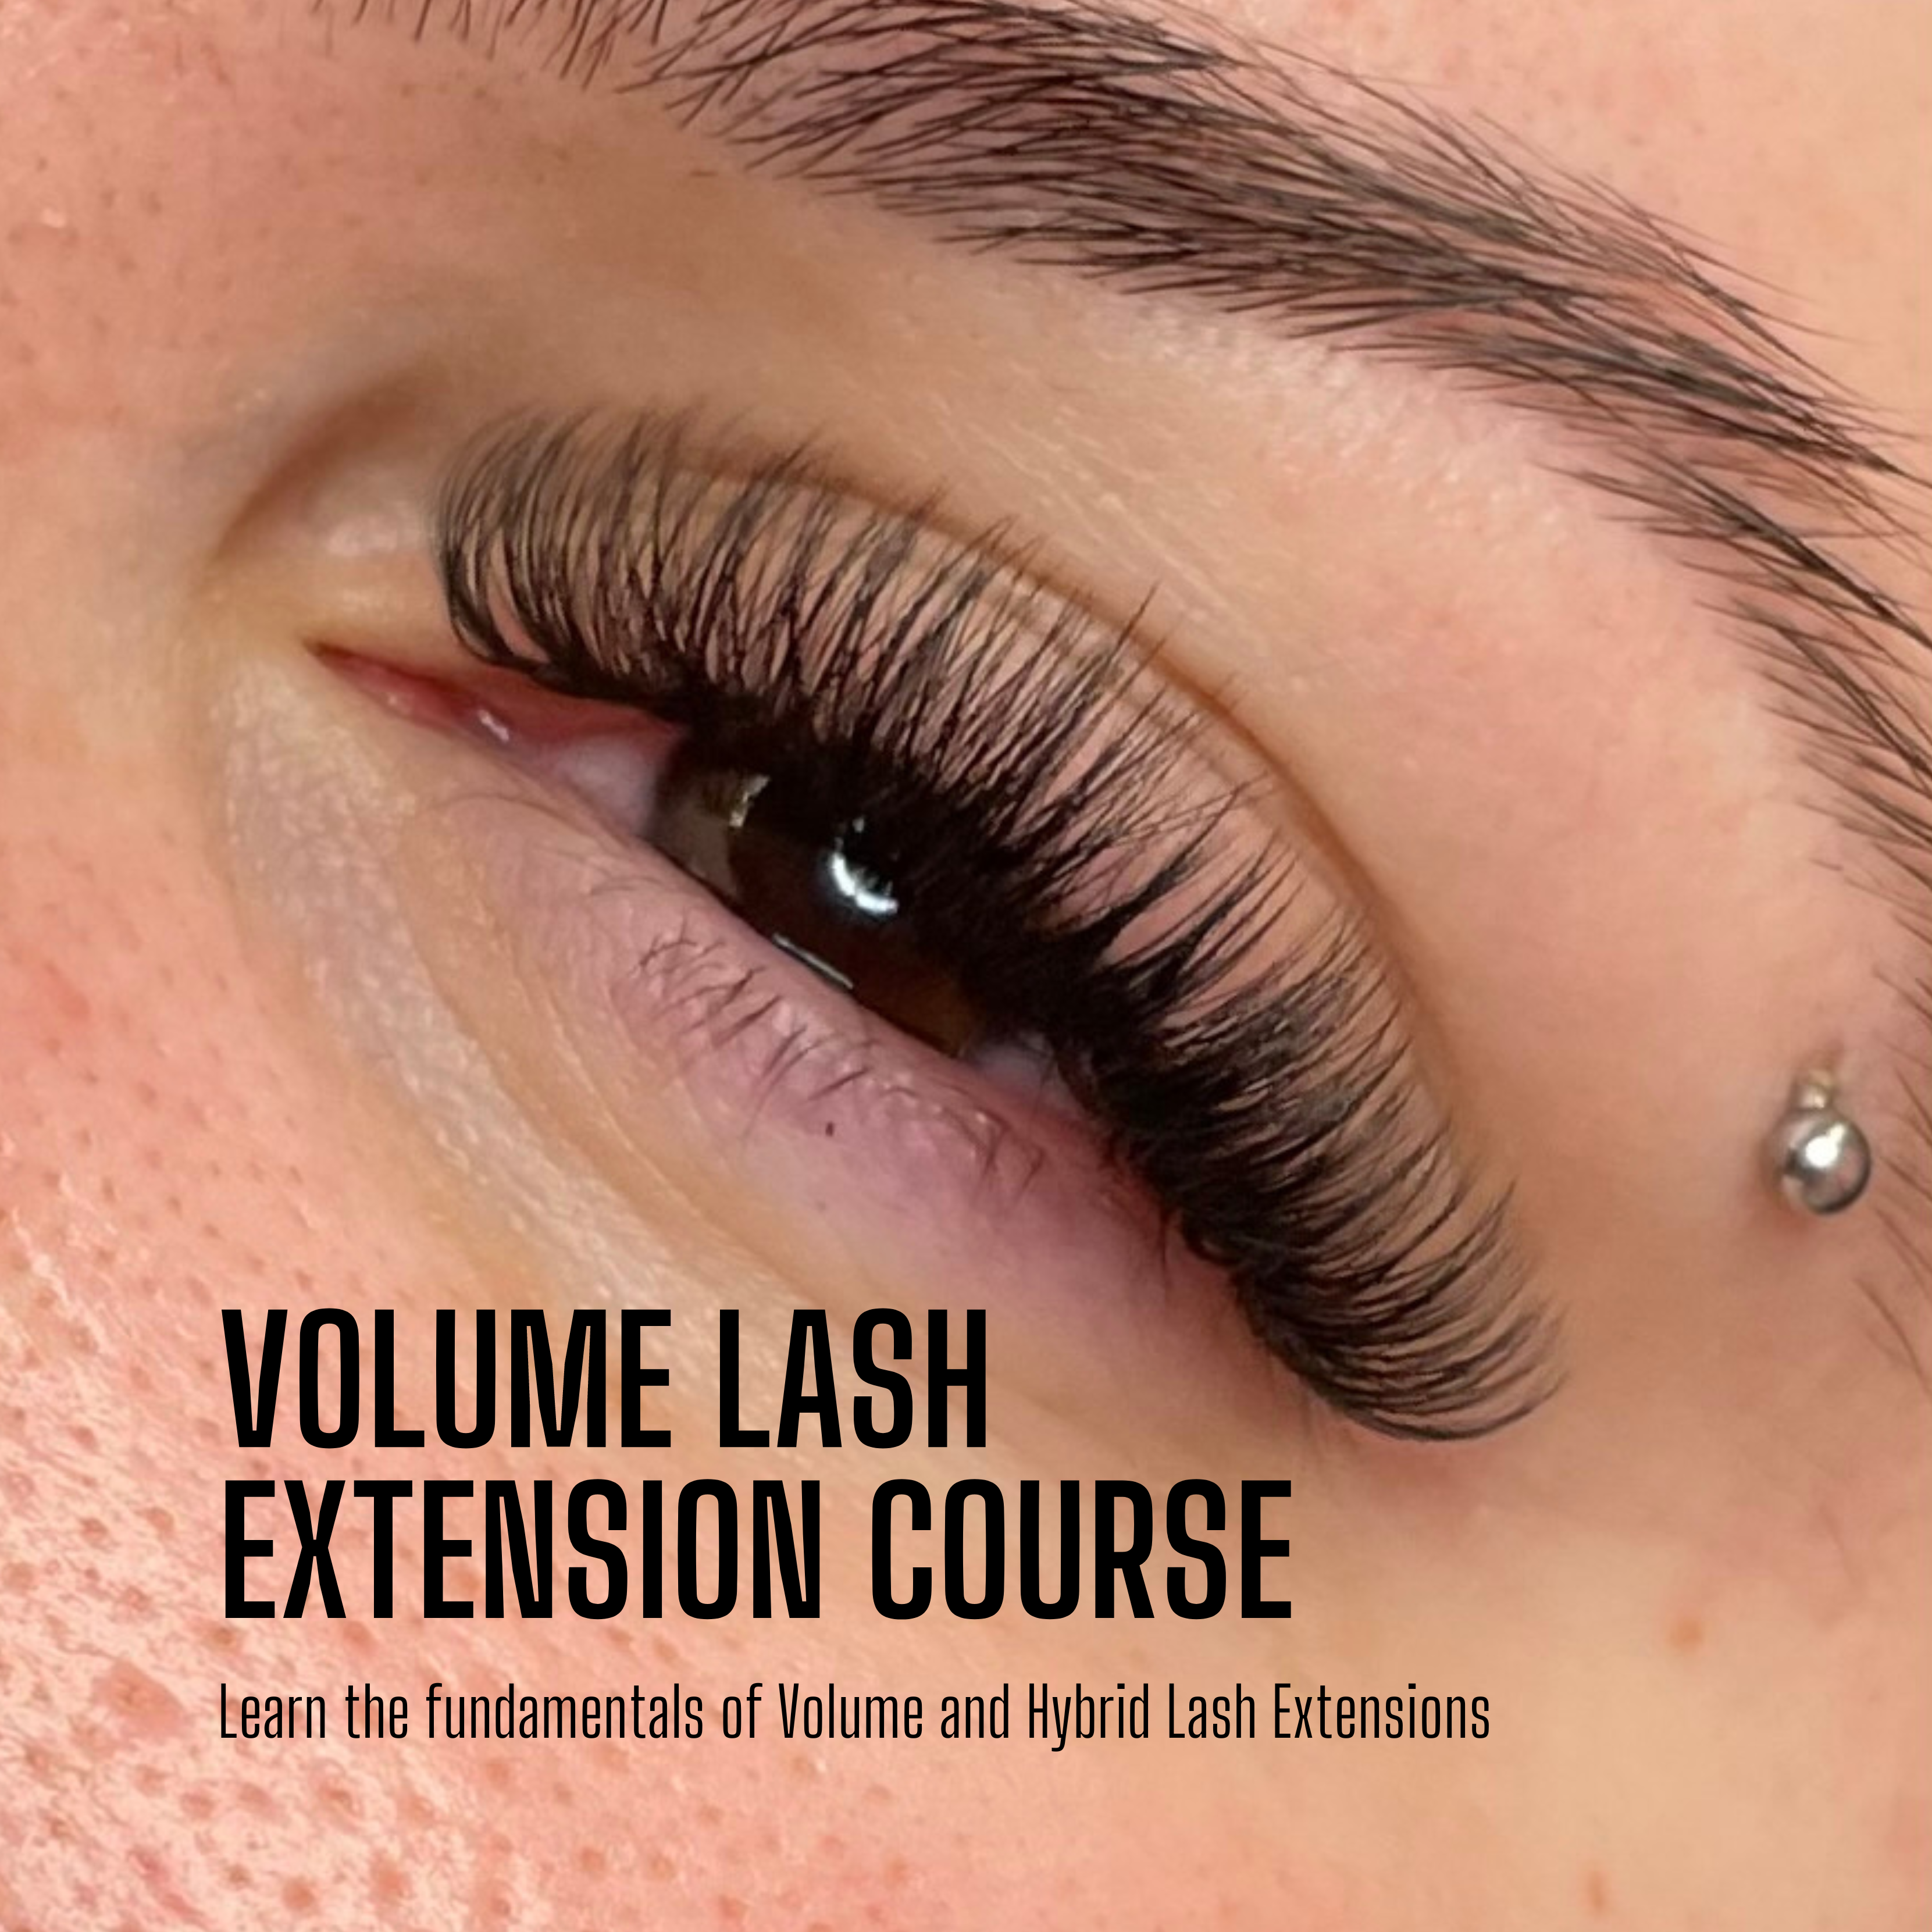 Online Volume Lash Extension Course - No Starter Kit